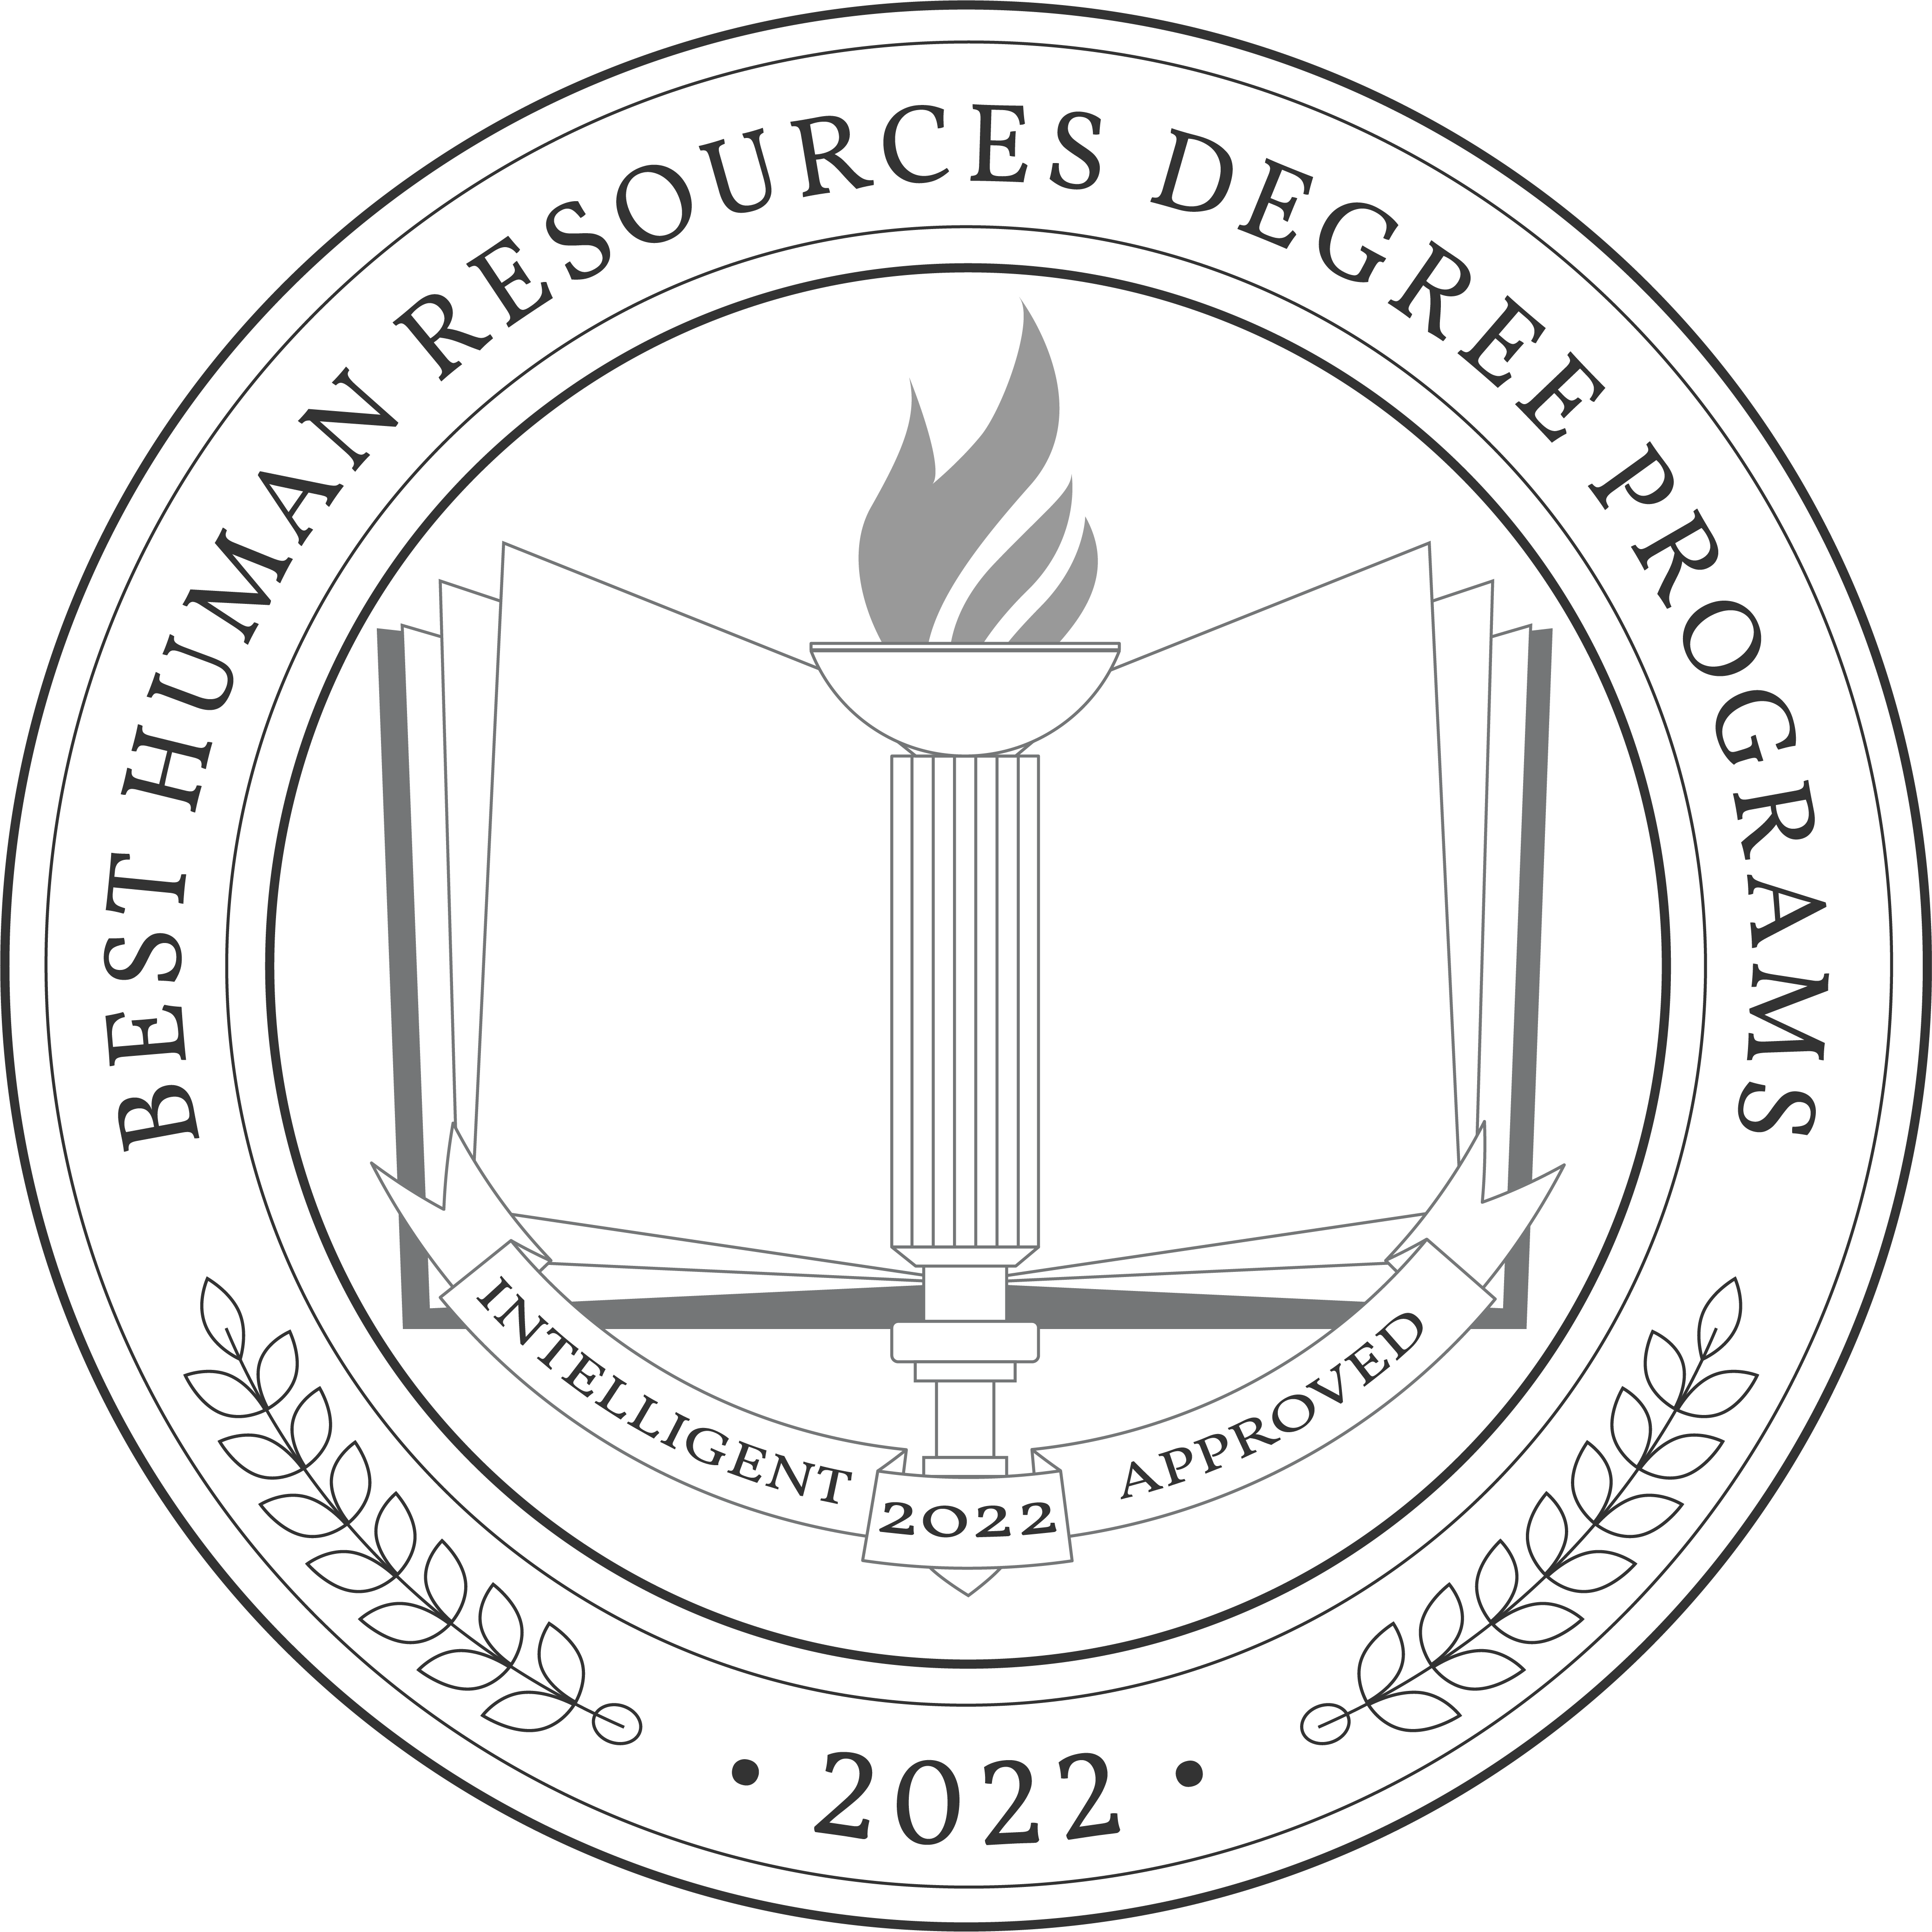 Best-Human-Resources-Degree-Programs-Badge